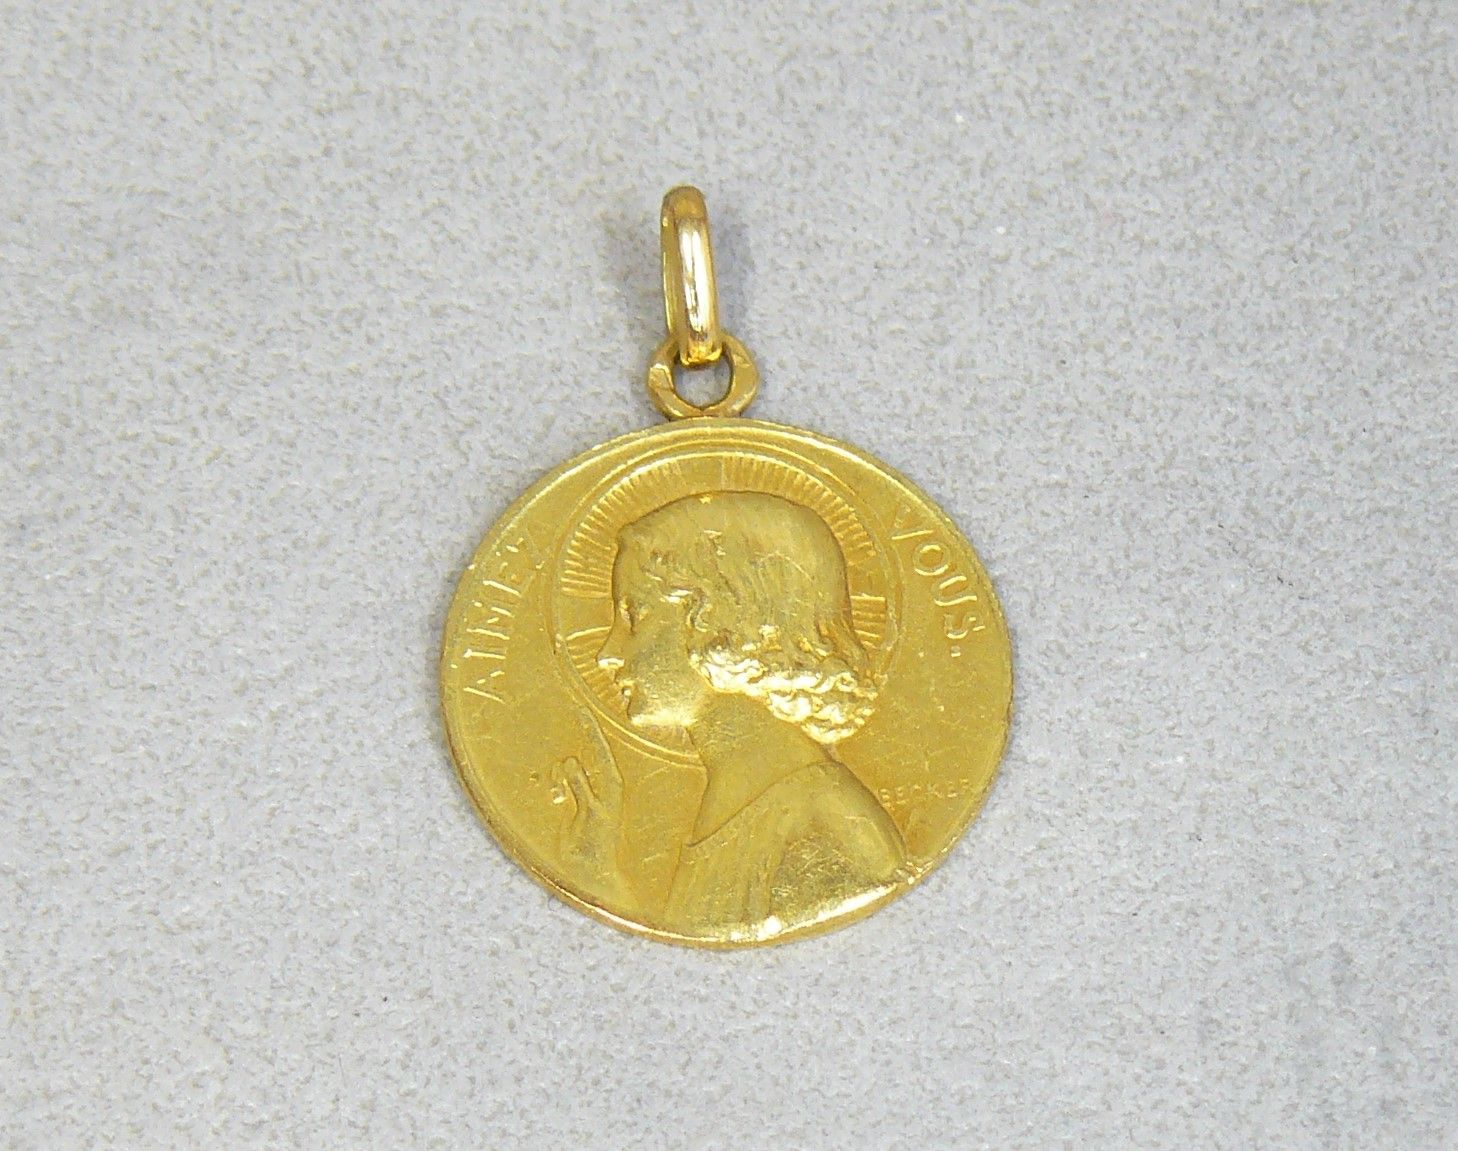 Null 洗礼金质奖章（鹰），指定为 "Aimez Vous"，并署名贝克尔--重量为4克